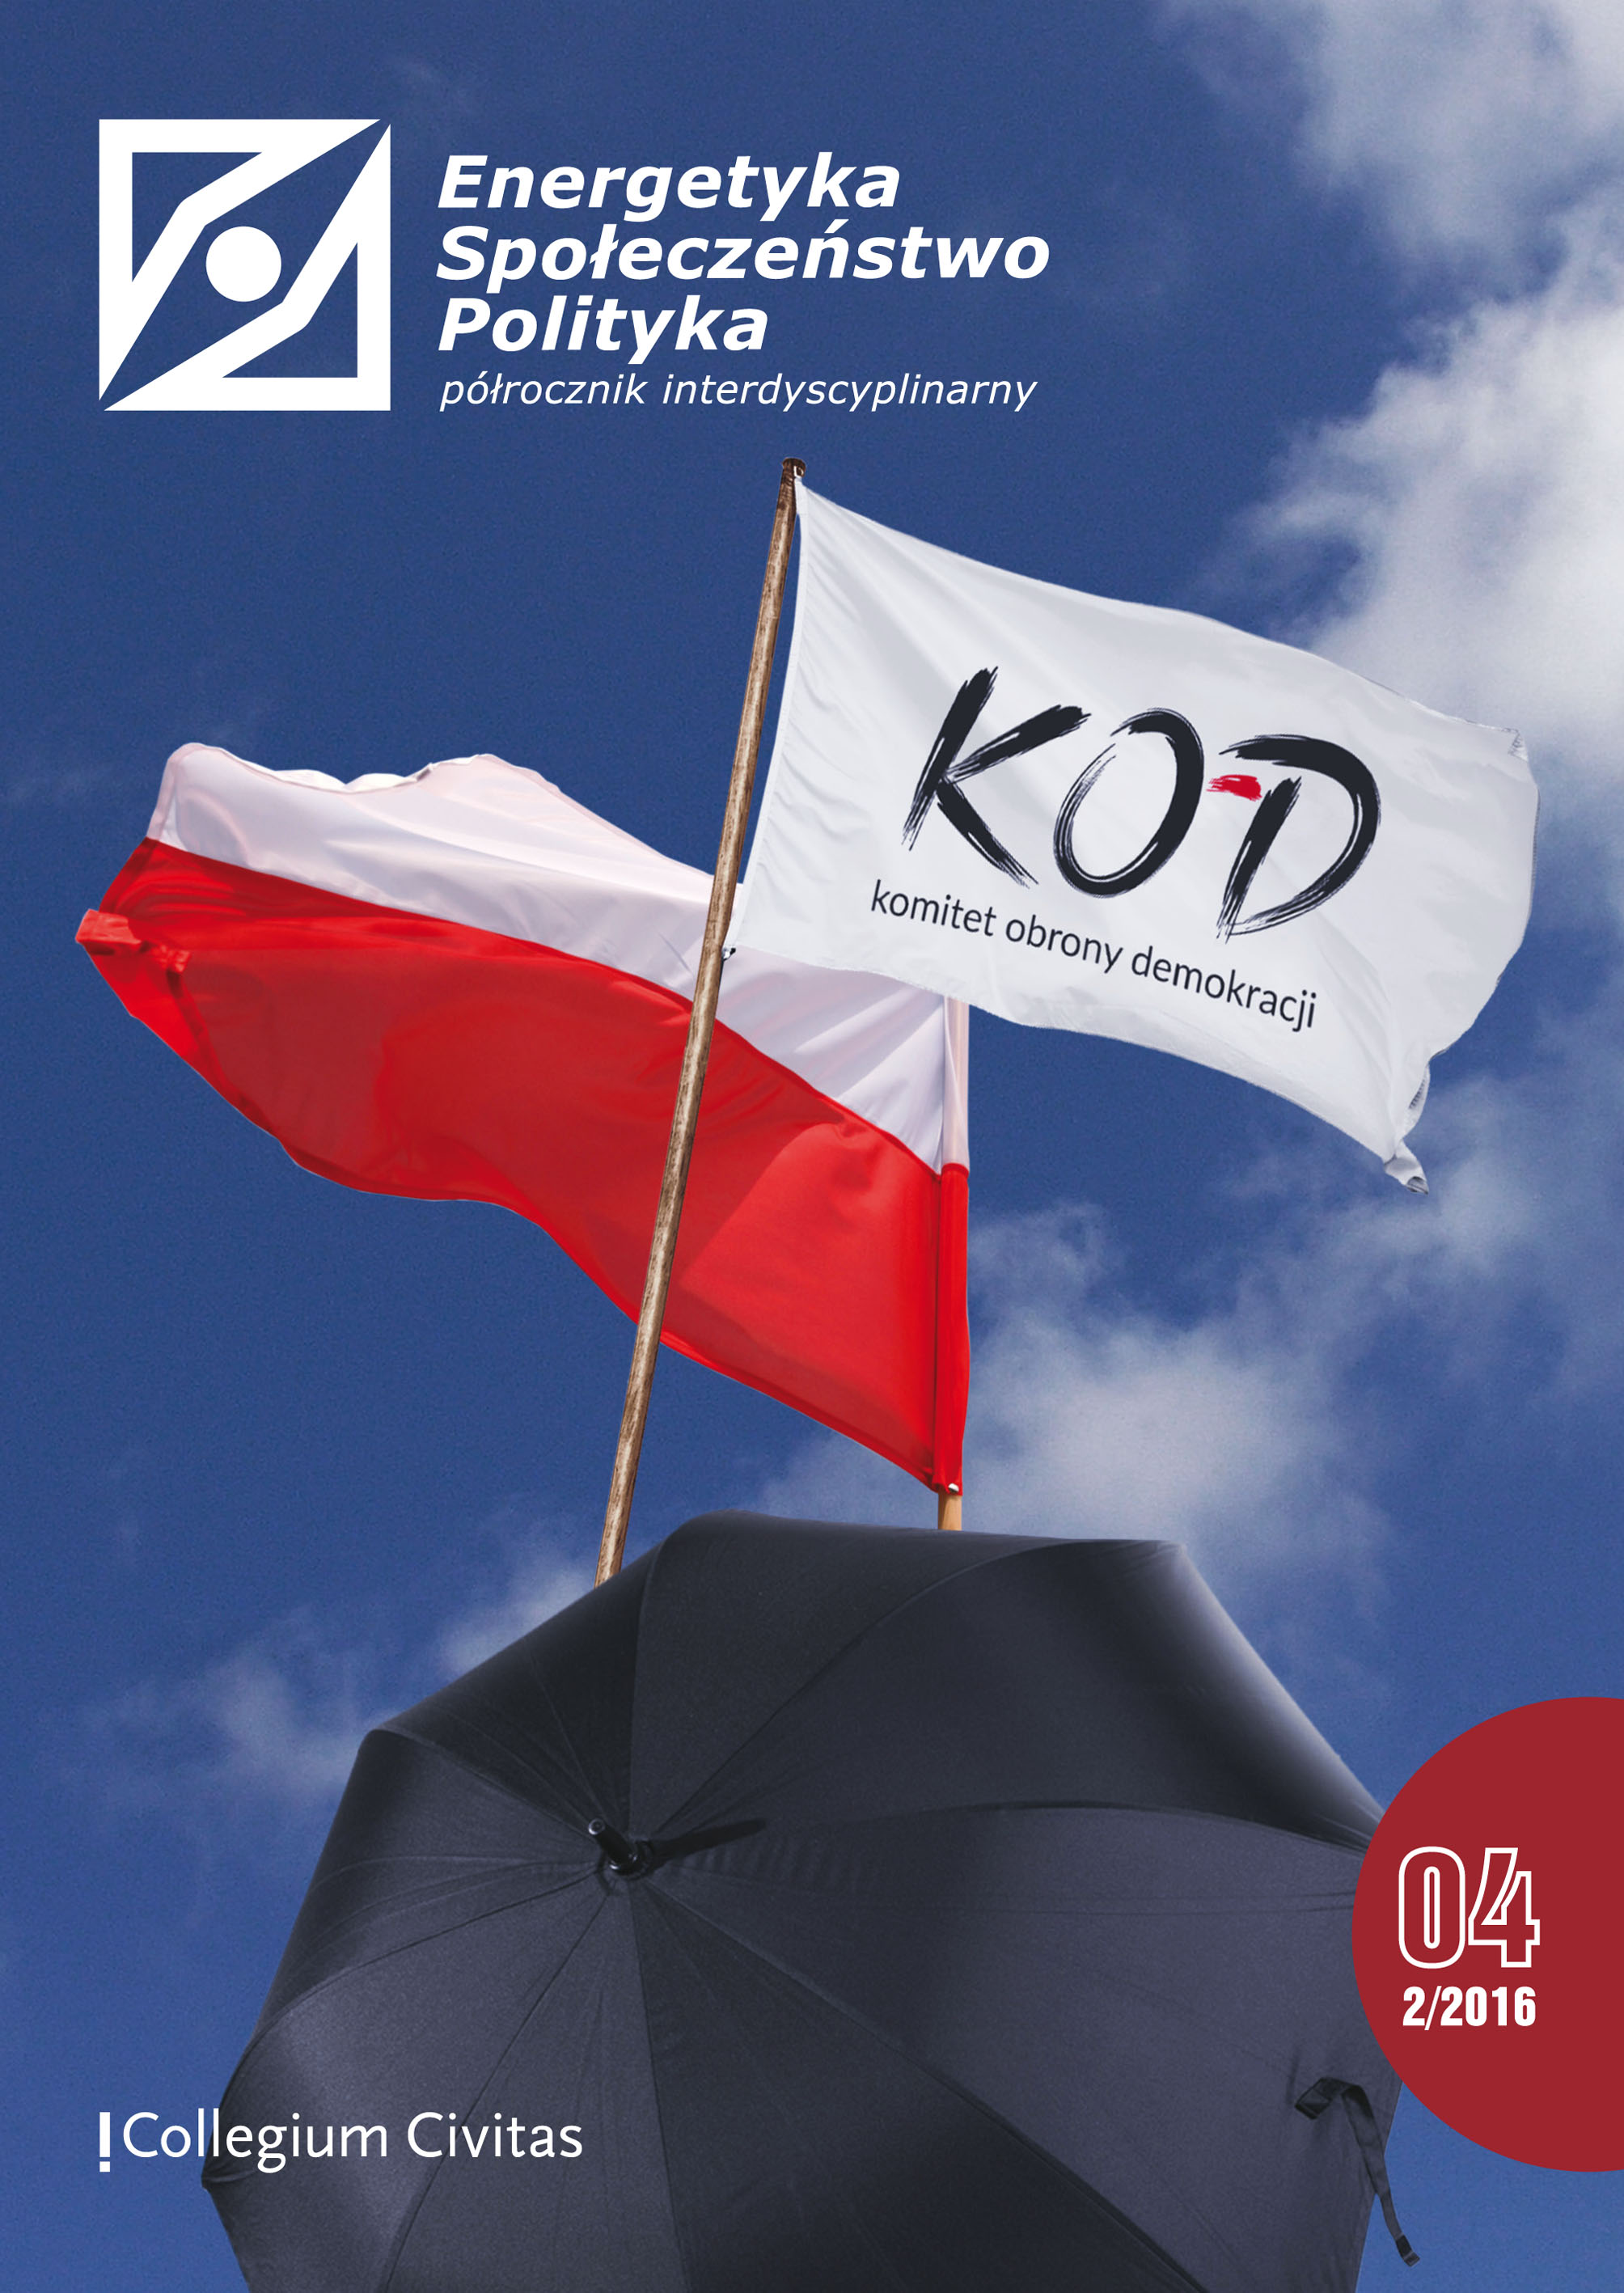 Poles’ attitudes toward modernization Cover Image